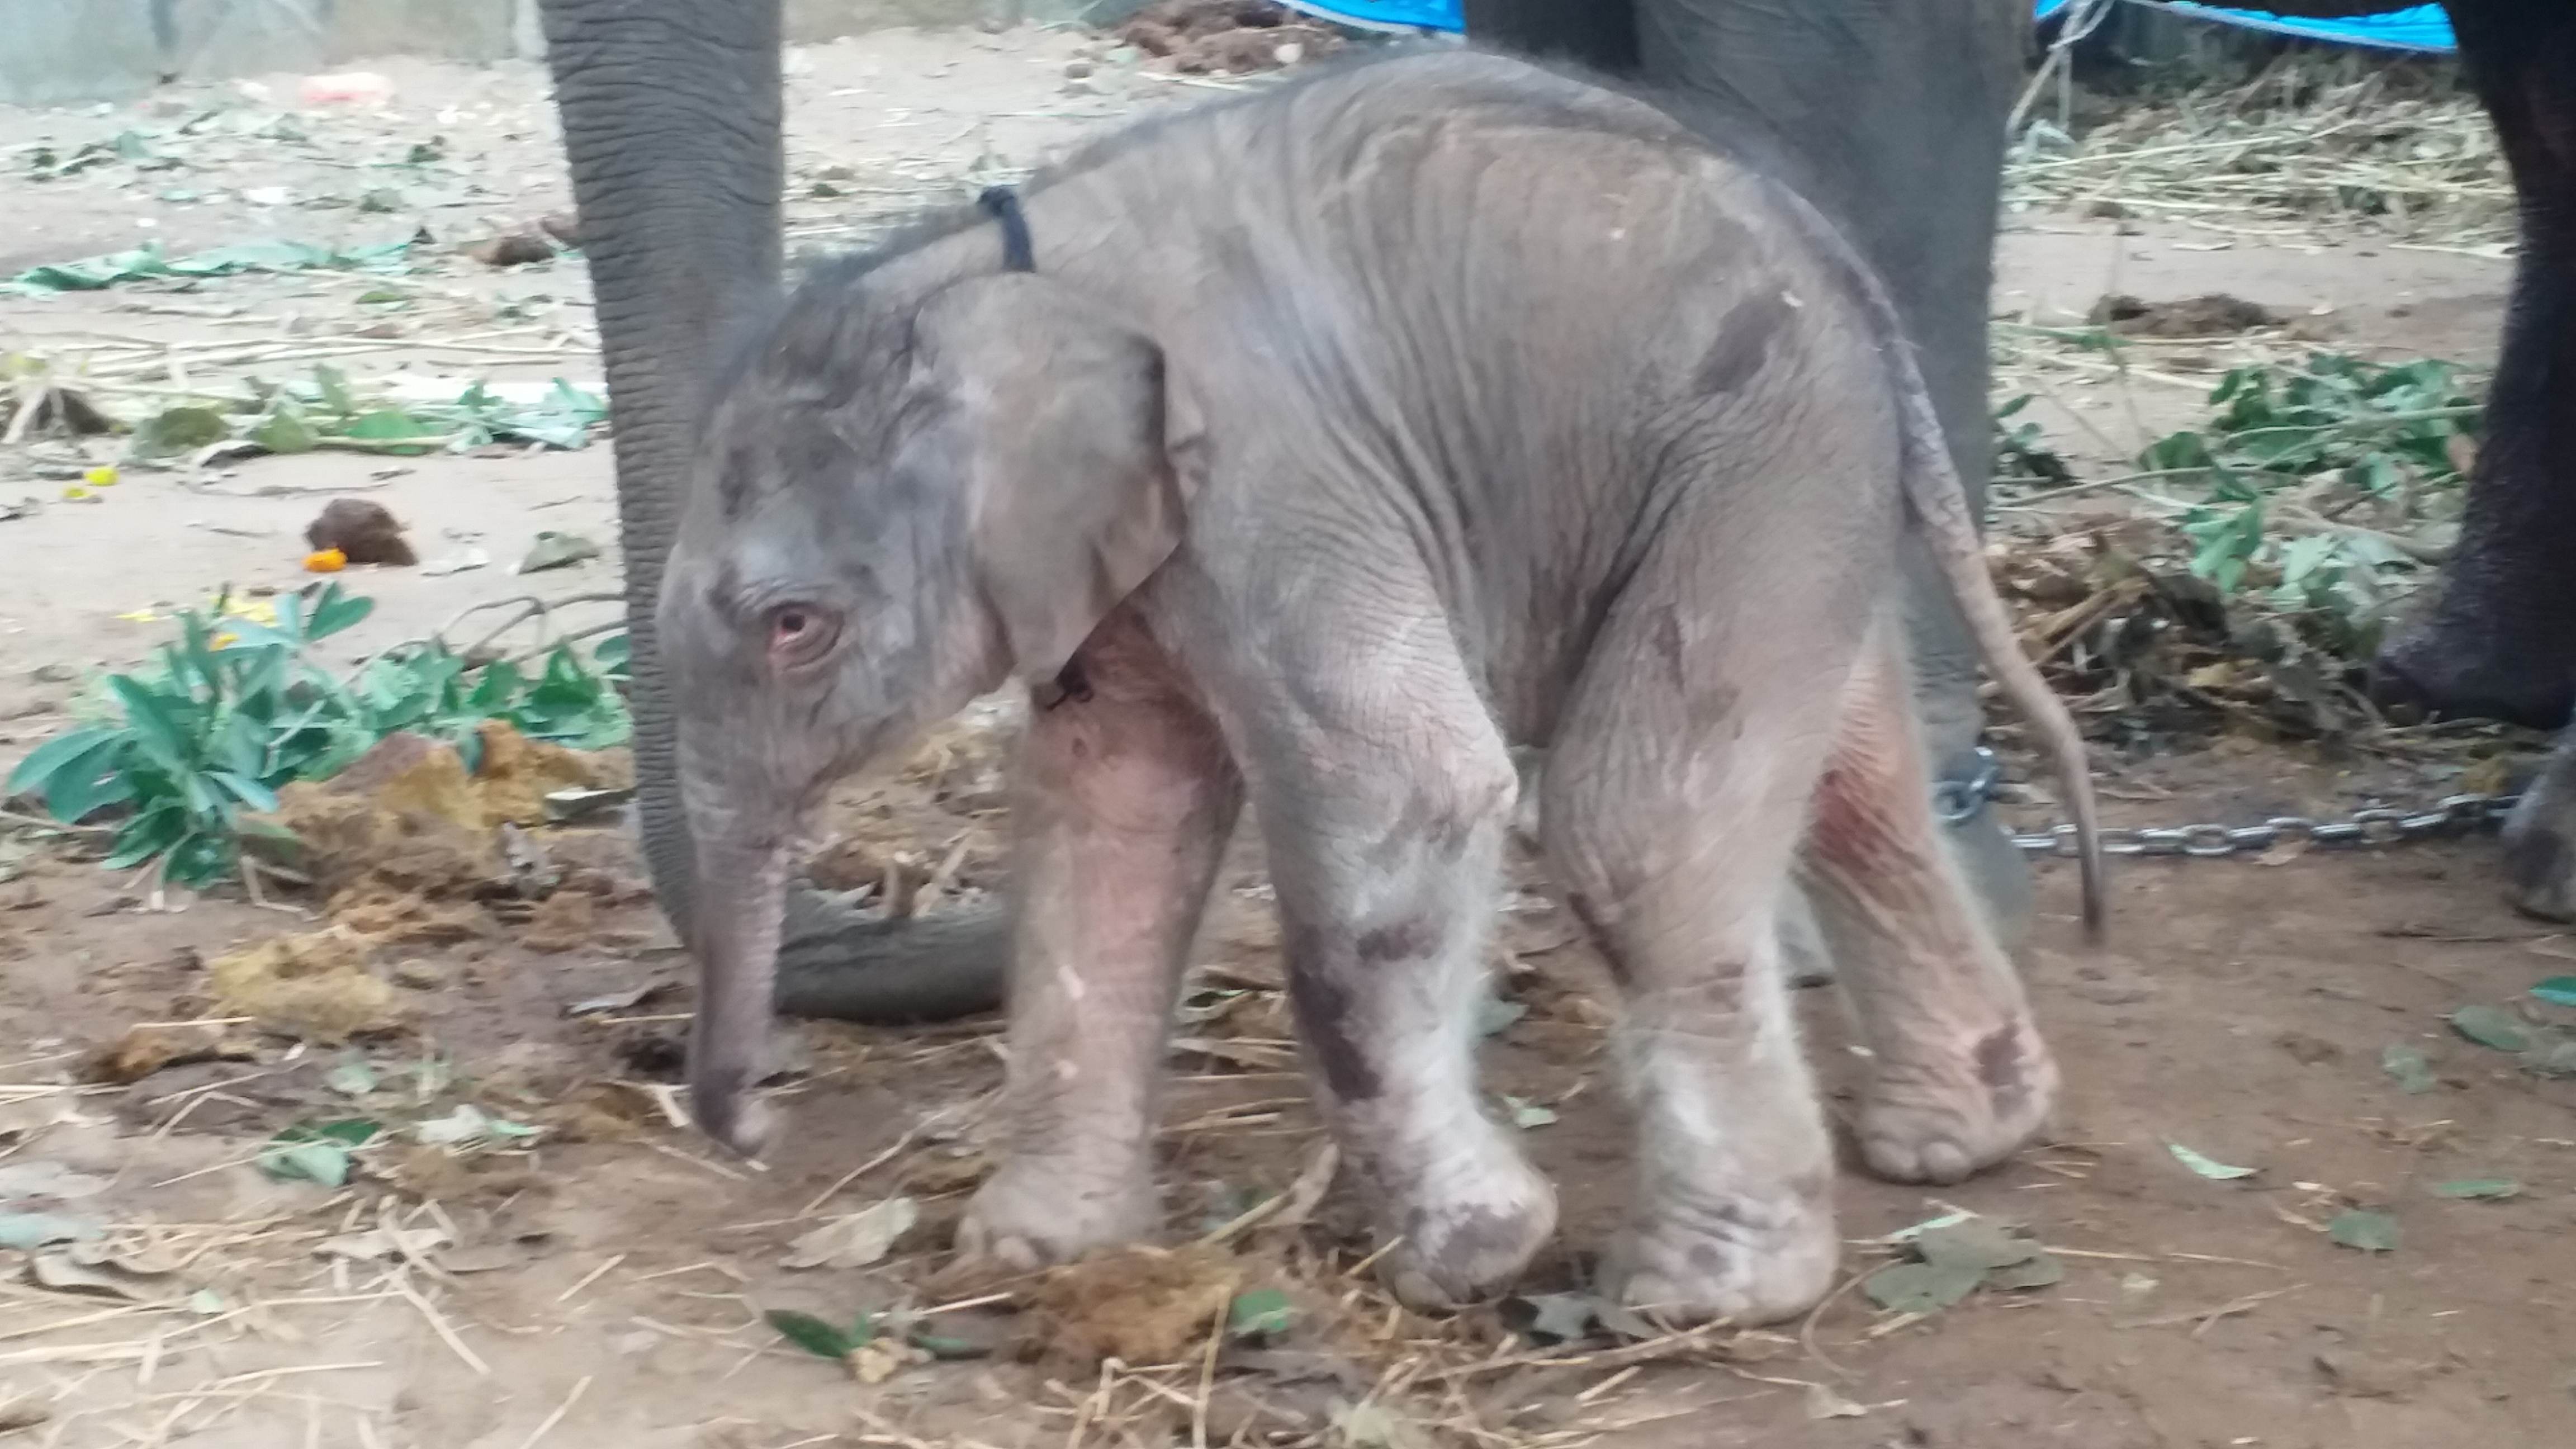 A baby elephant born to Netravati